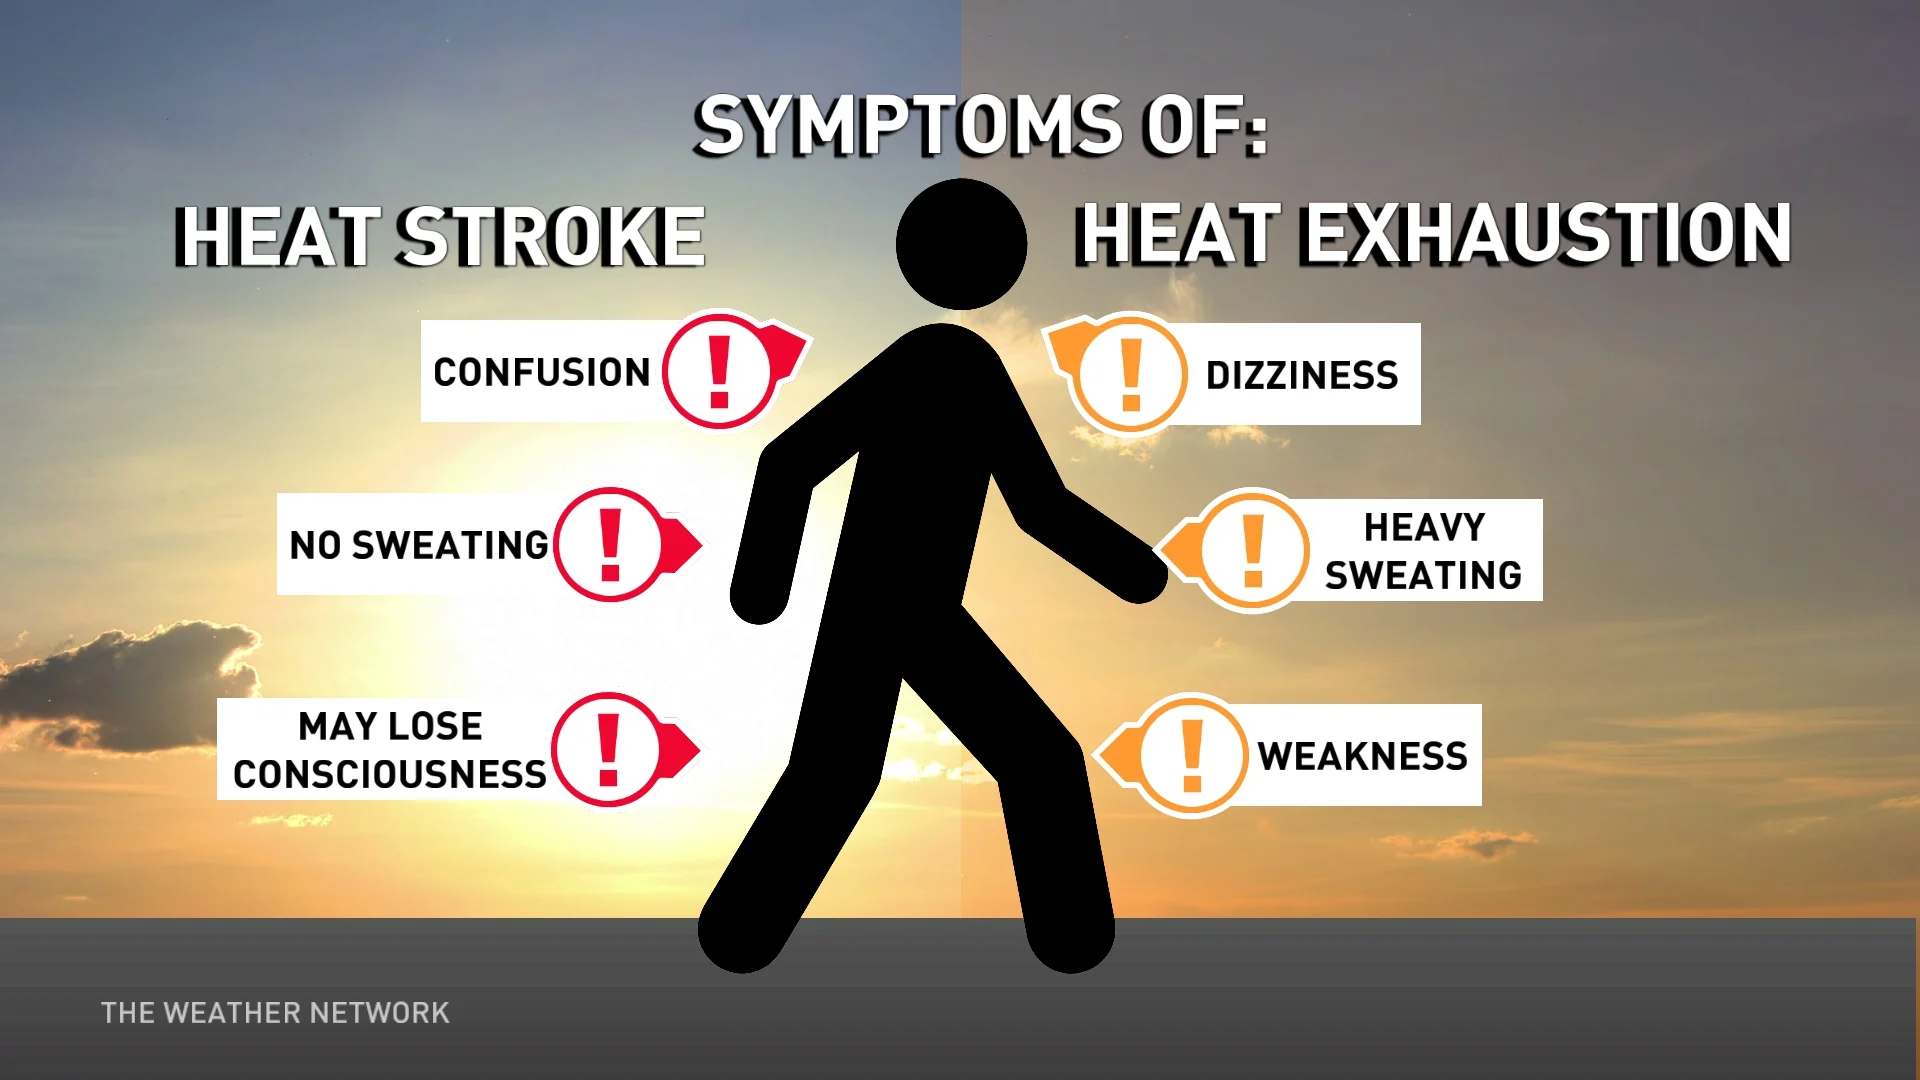 Heat exhaustion symptoms